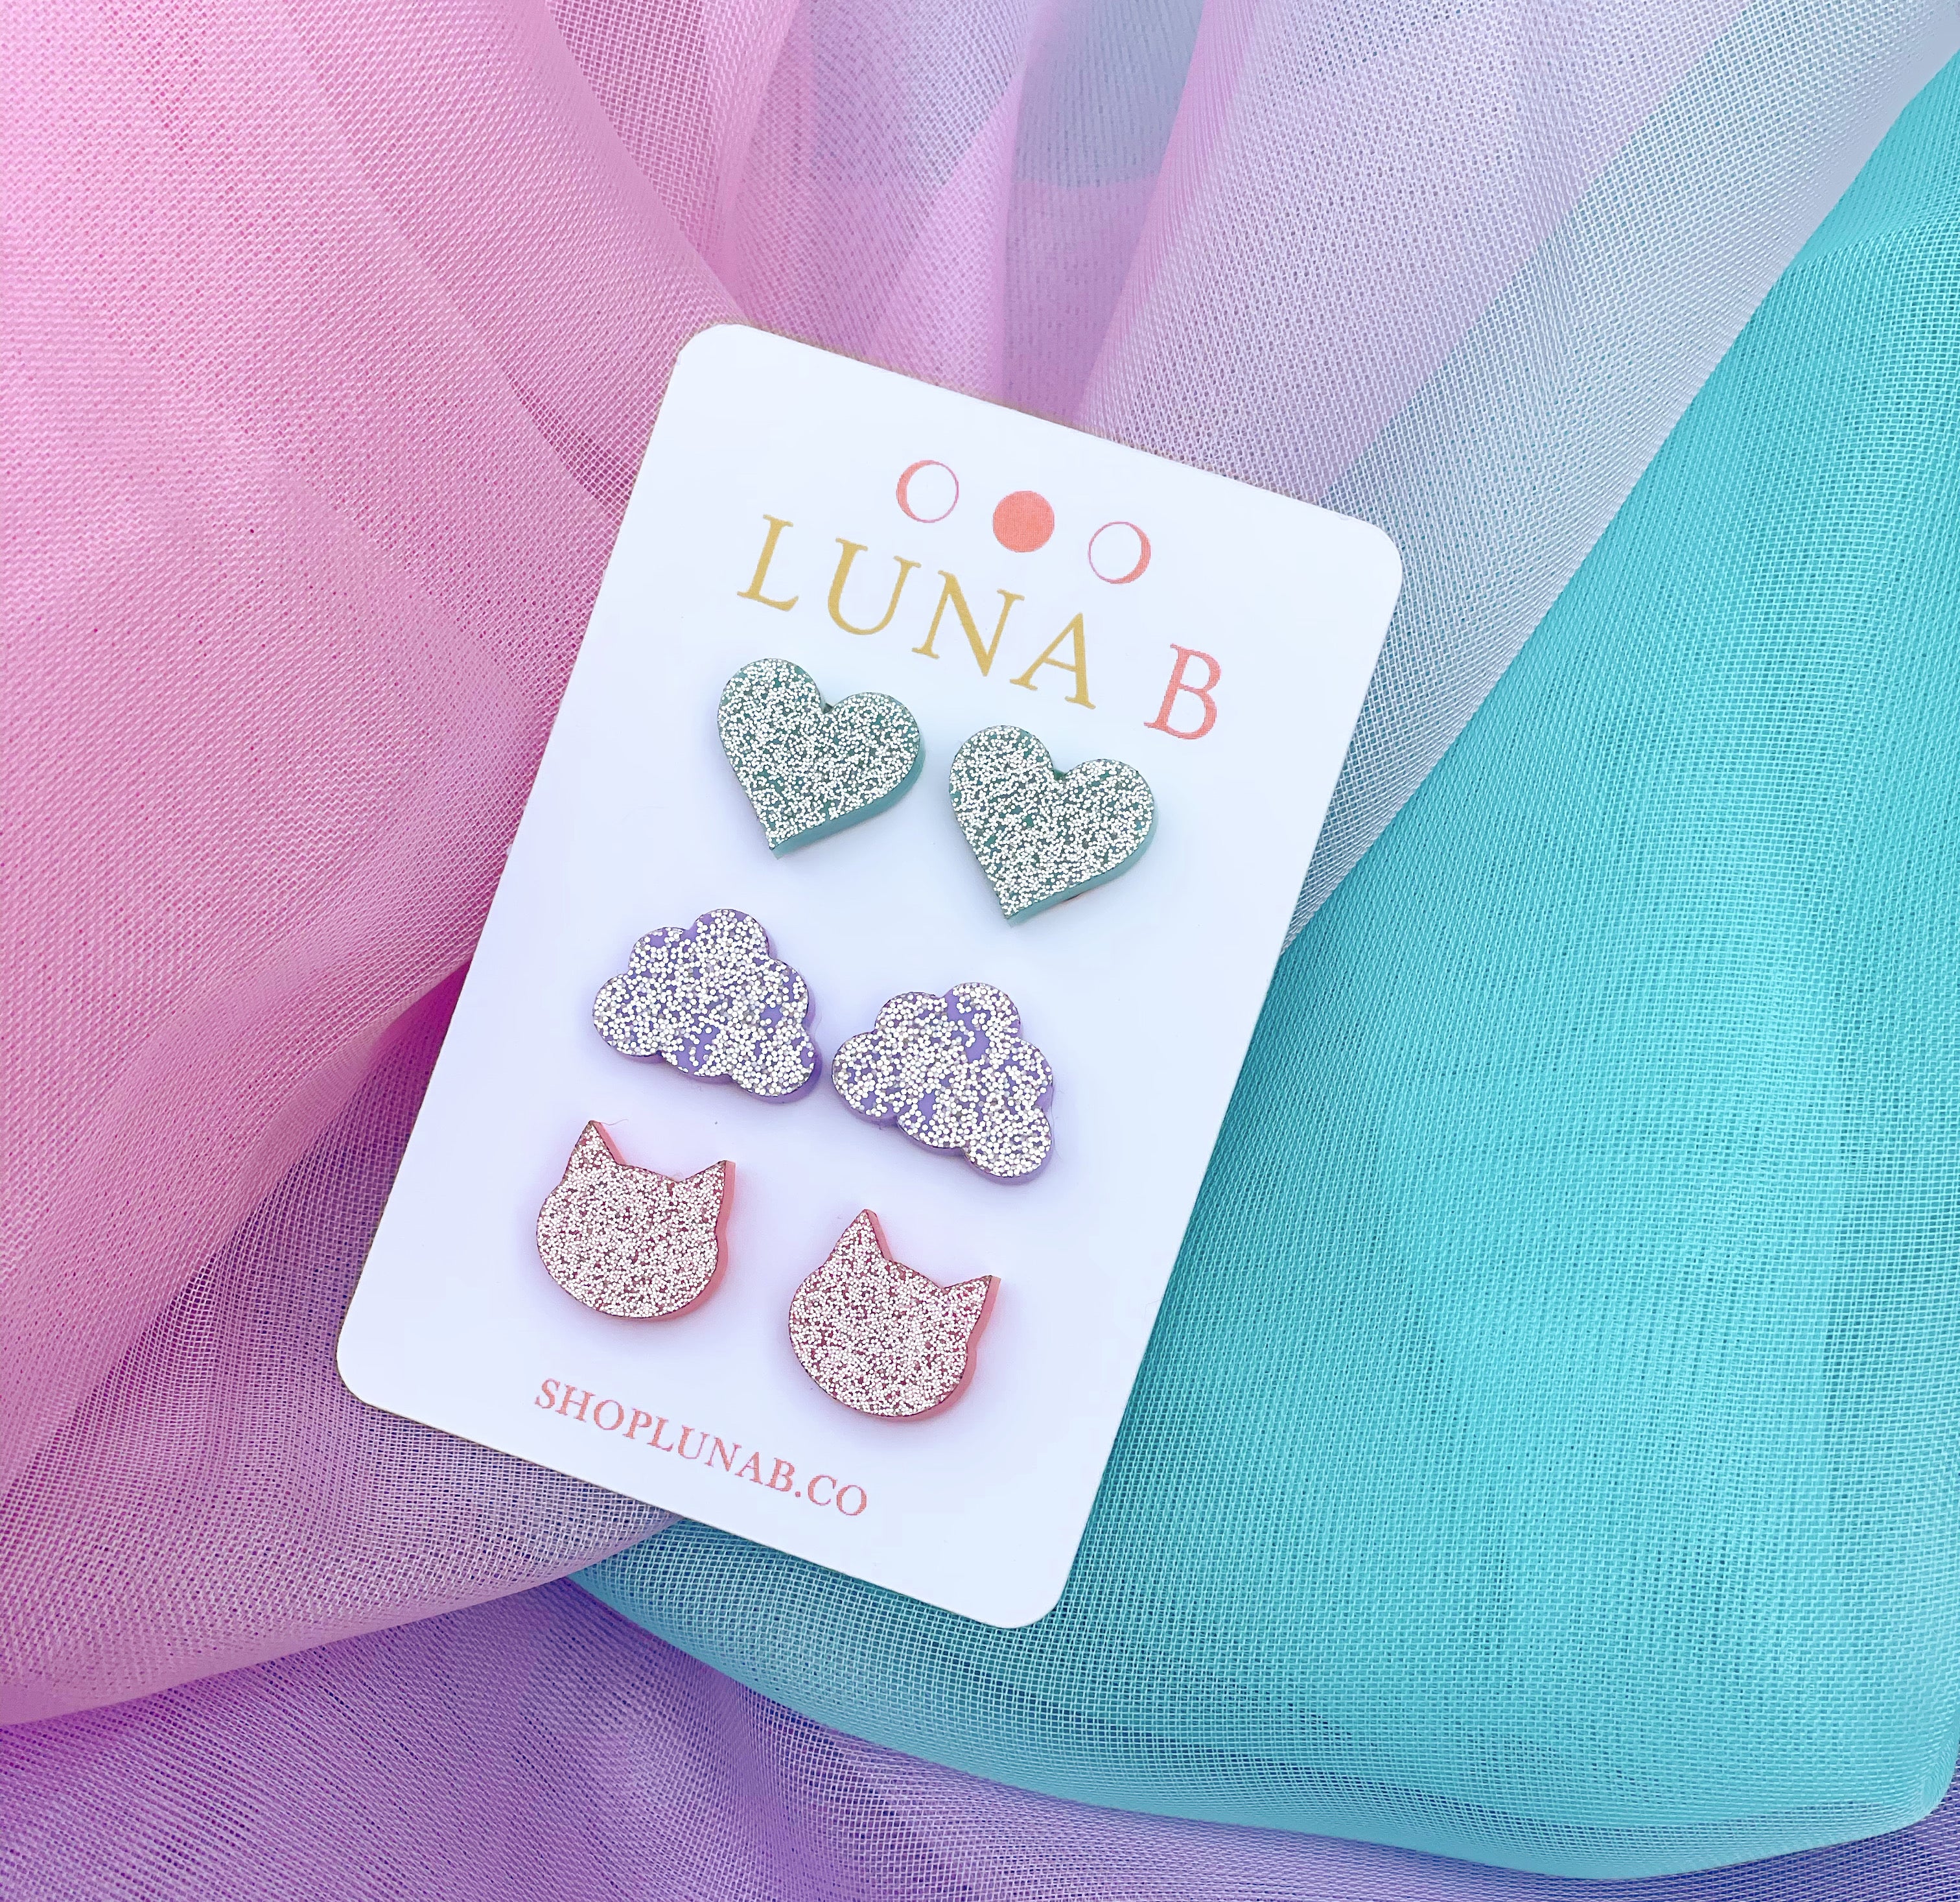 Luna B Jewelry – Shop Luna B